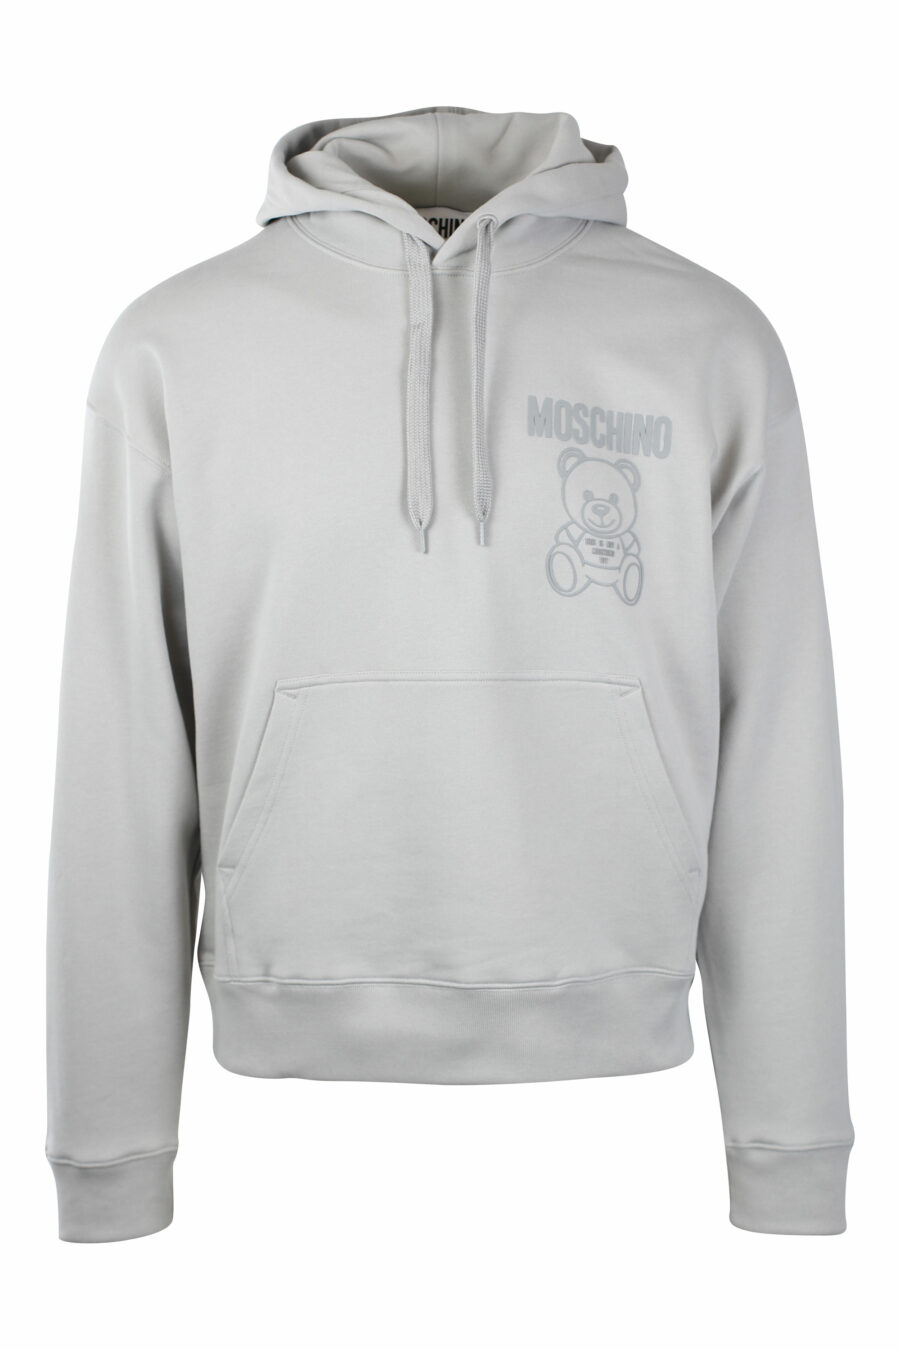 Graues Kapuzensweatshirt mit monochromem Bären-Mini-Logo - IMG 1401